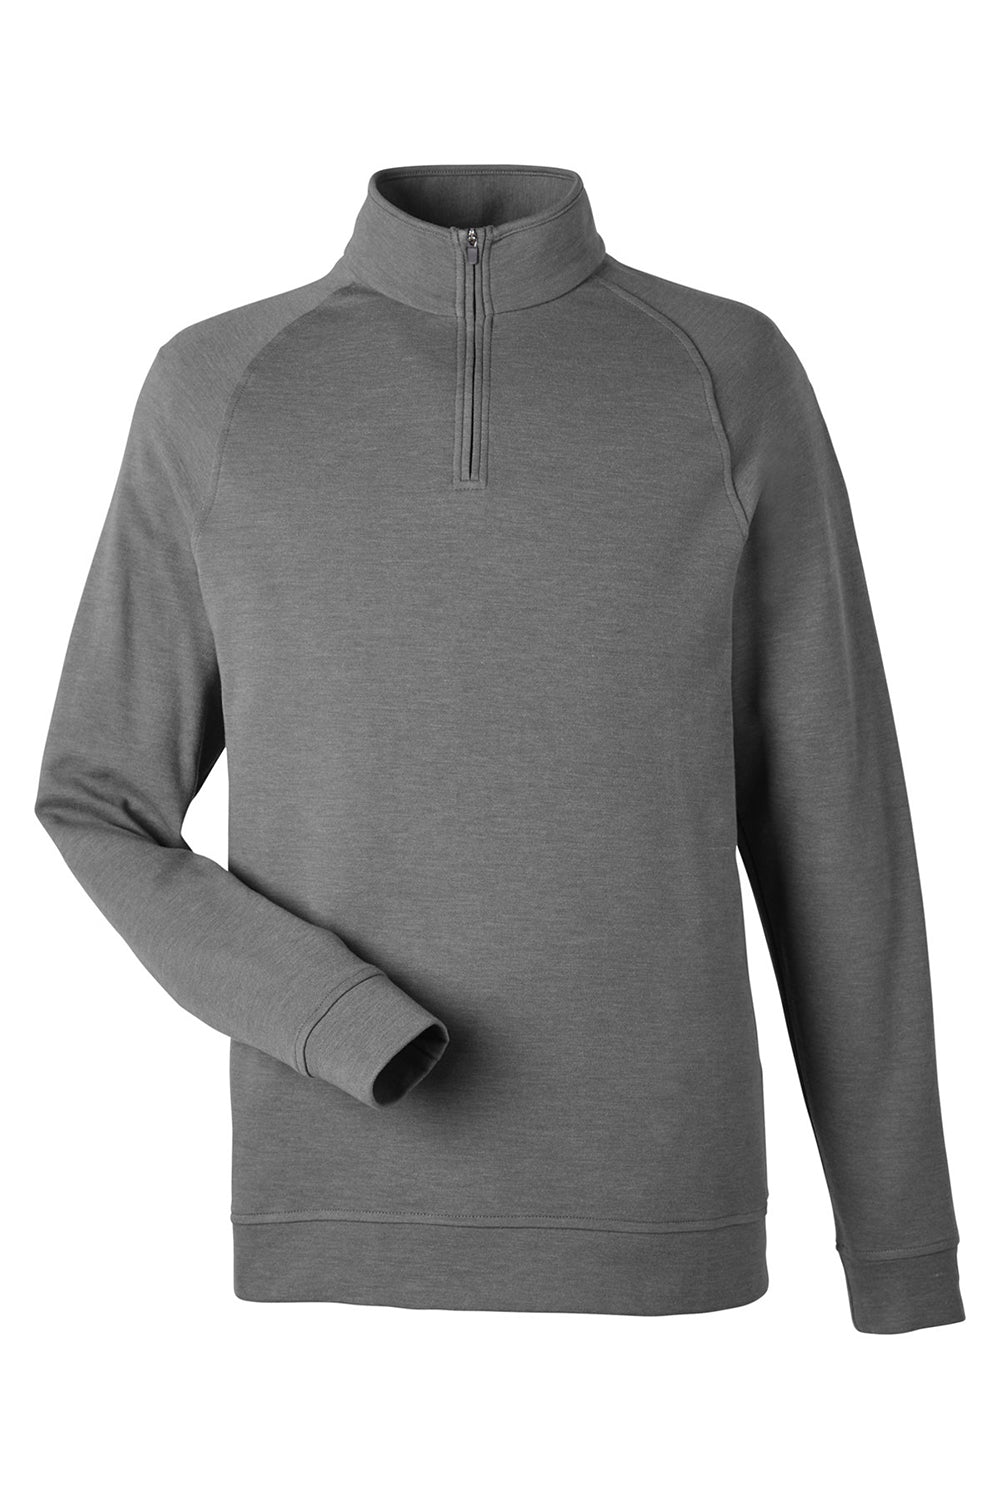 Devon & Jones DG481 Mens New Classics Charleston 1/4 Zip Sweatshirt Graphite Grey Melange Flat Front